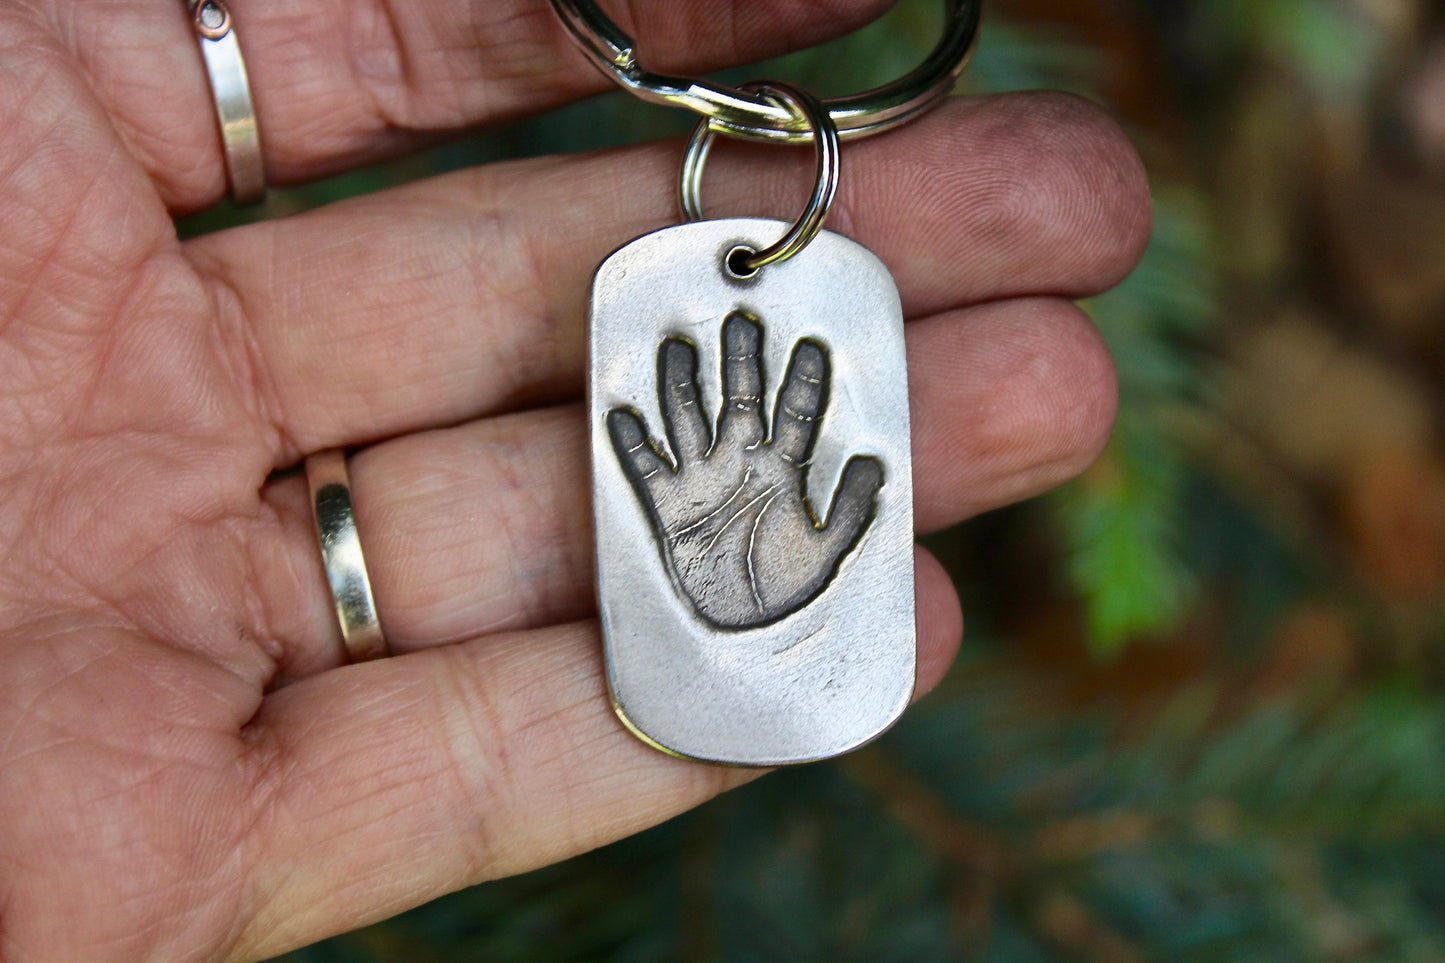 Real Child's Handprint Keychain